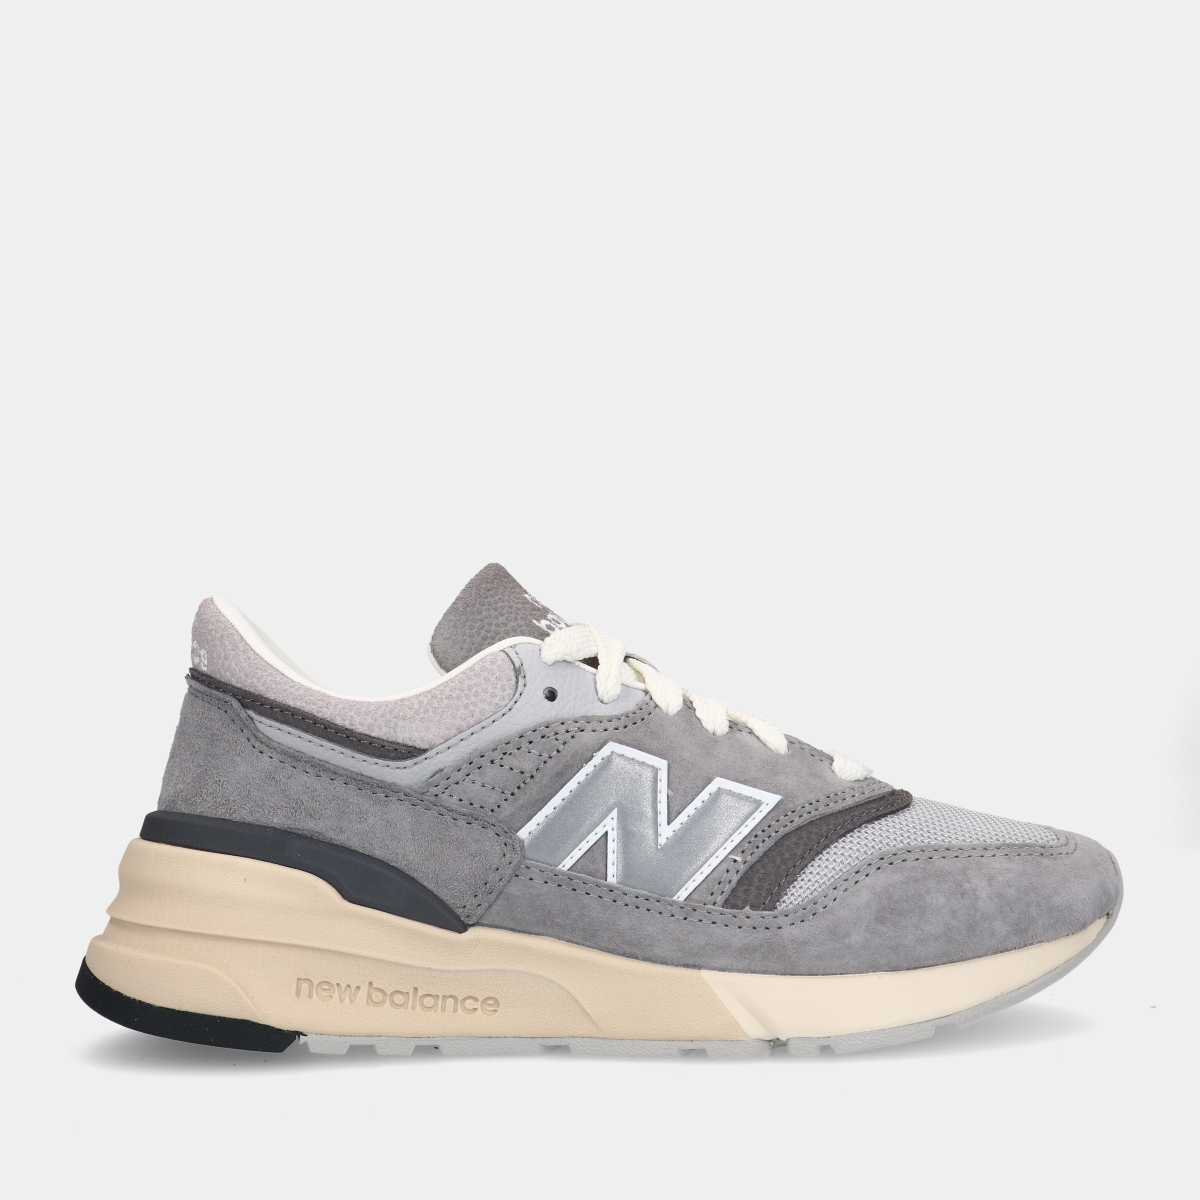 New Balance 997R Shadow Grey unisex sneakers